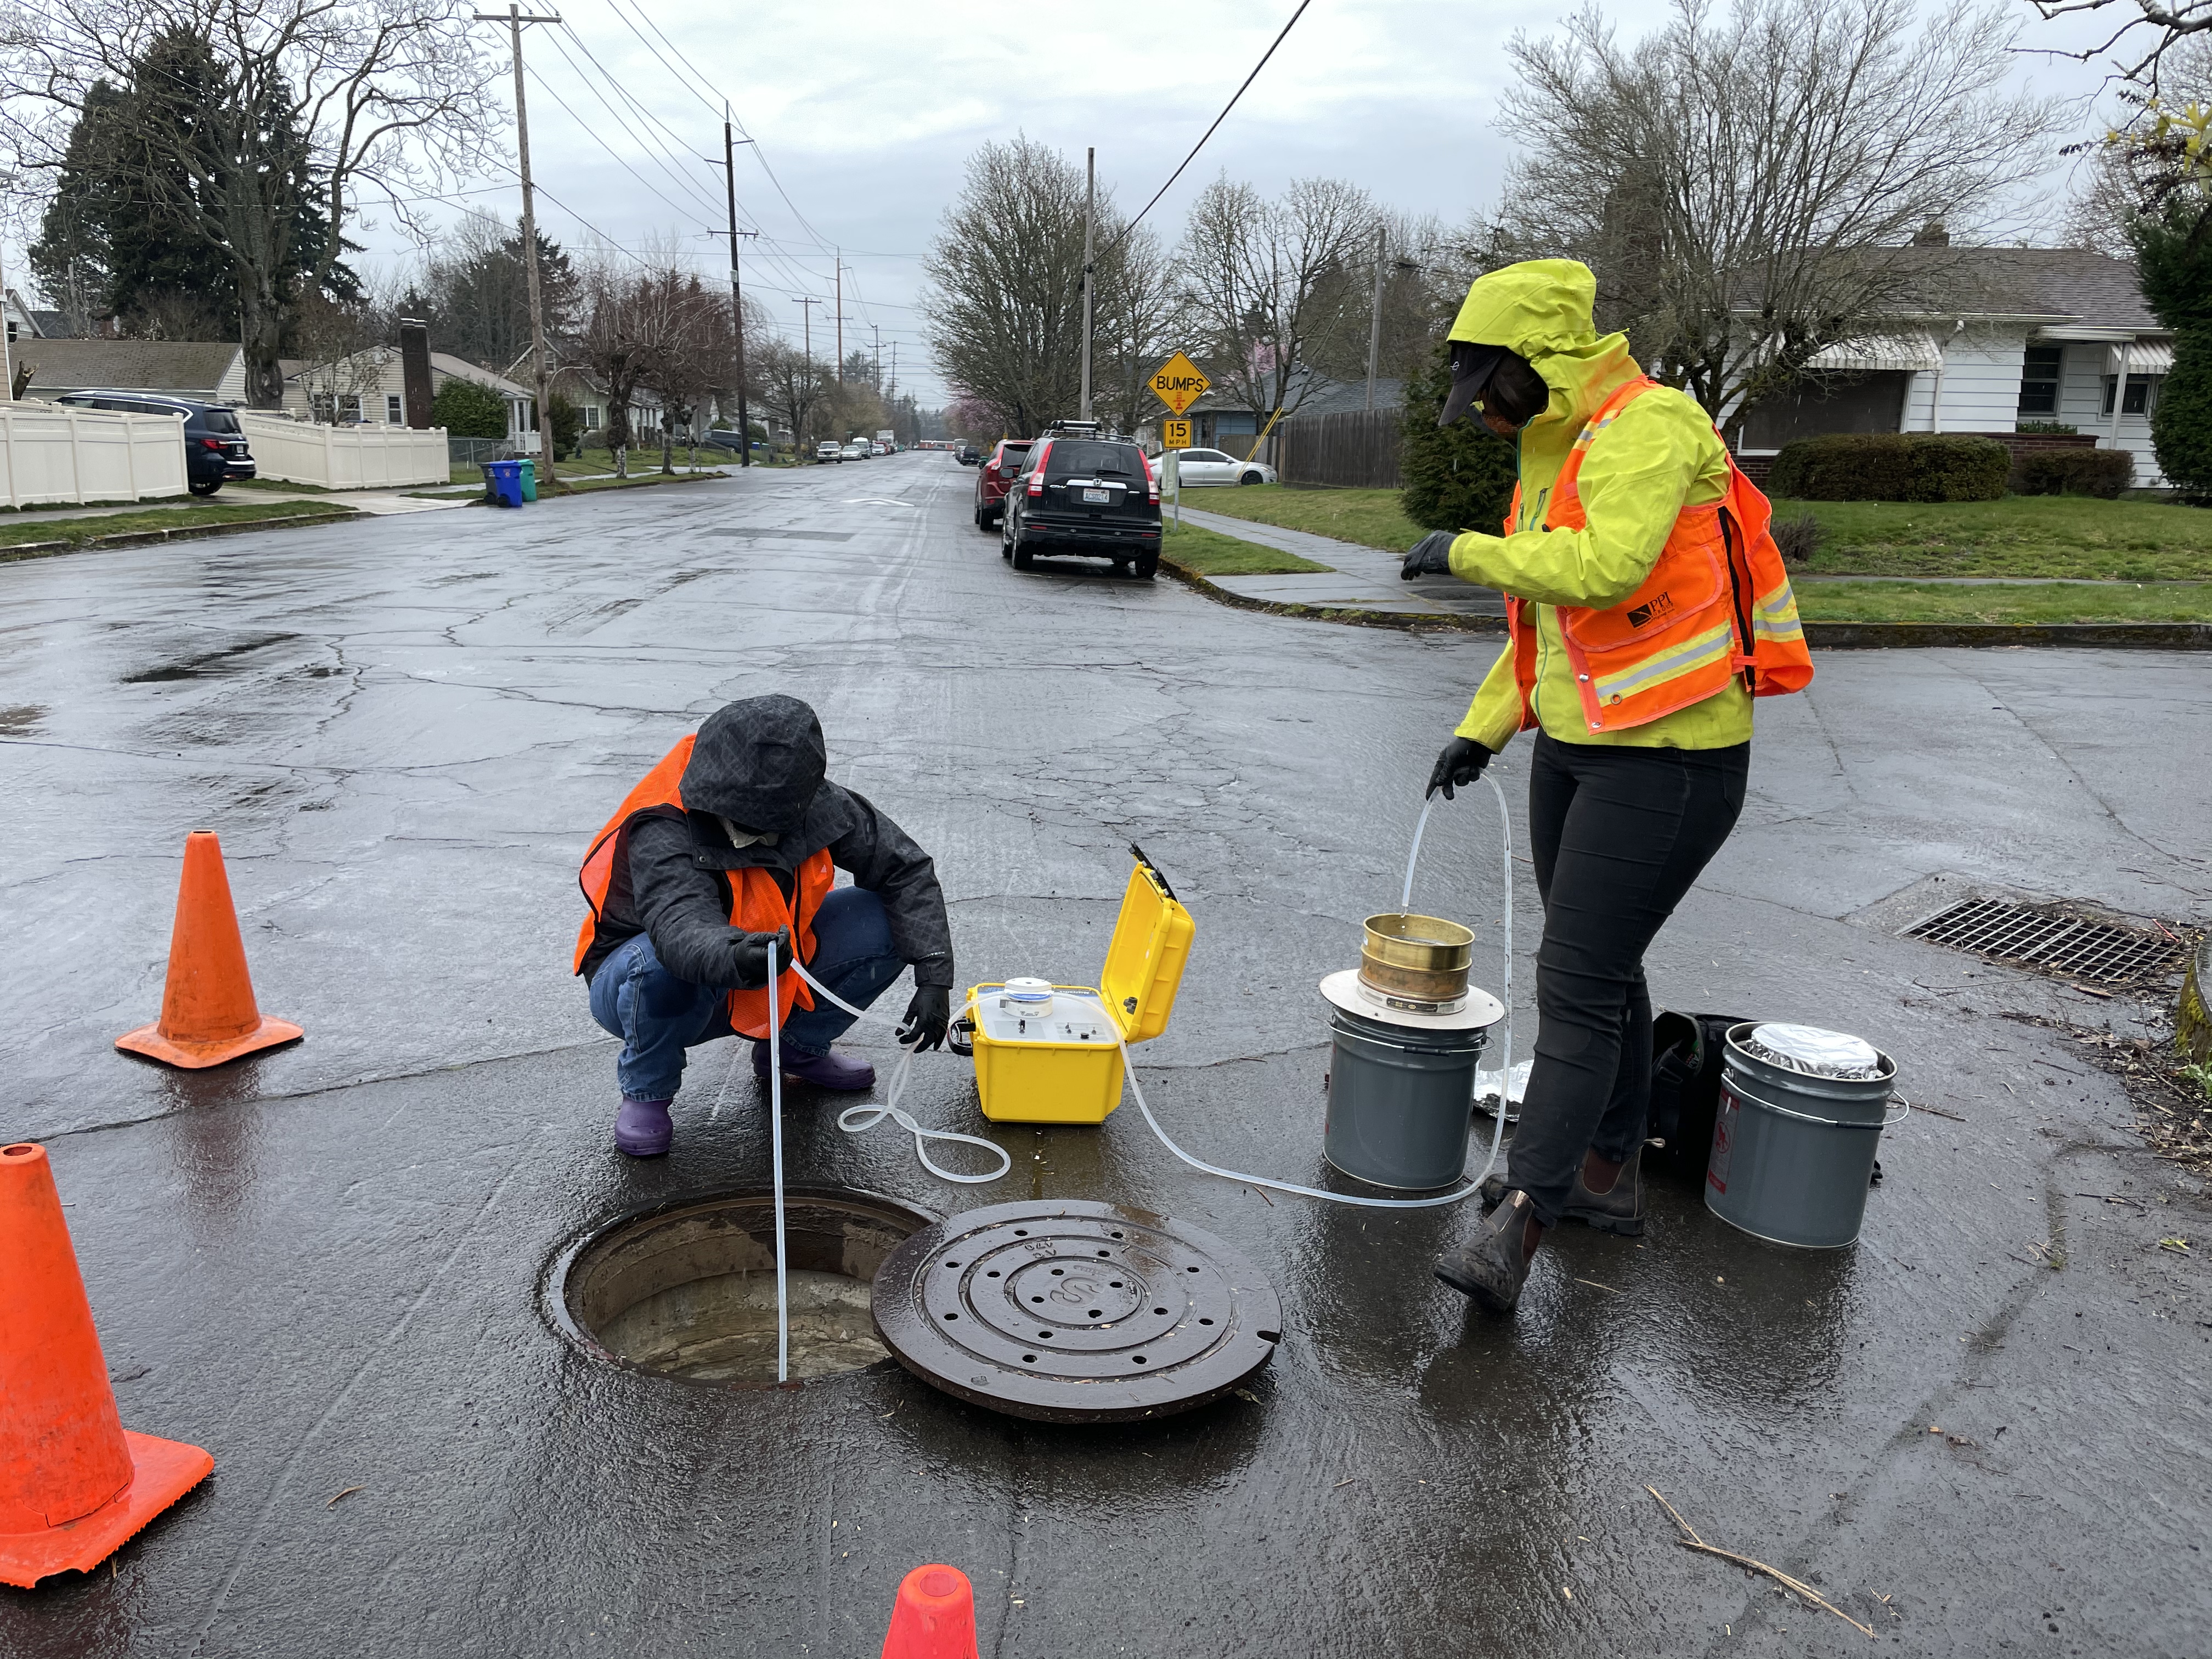 CE students taking stormwater sample in neighborhood